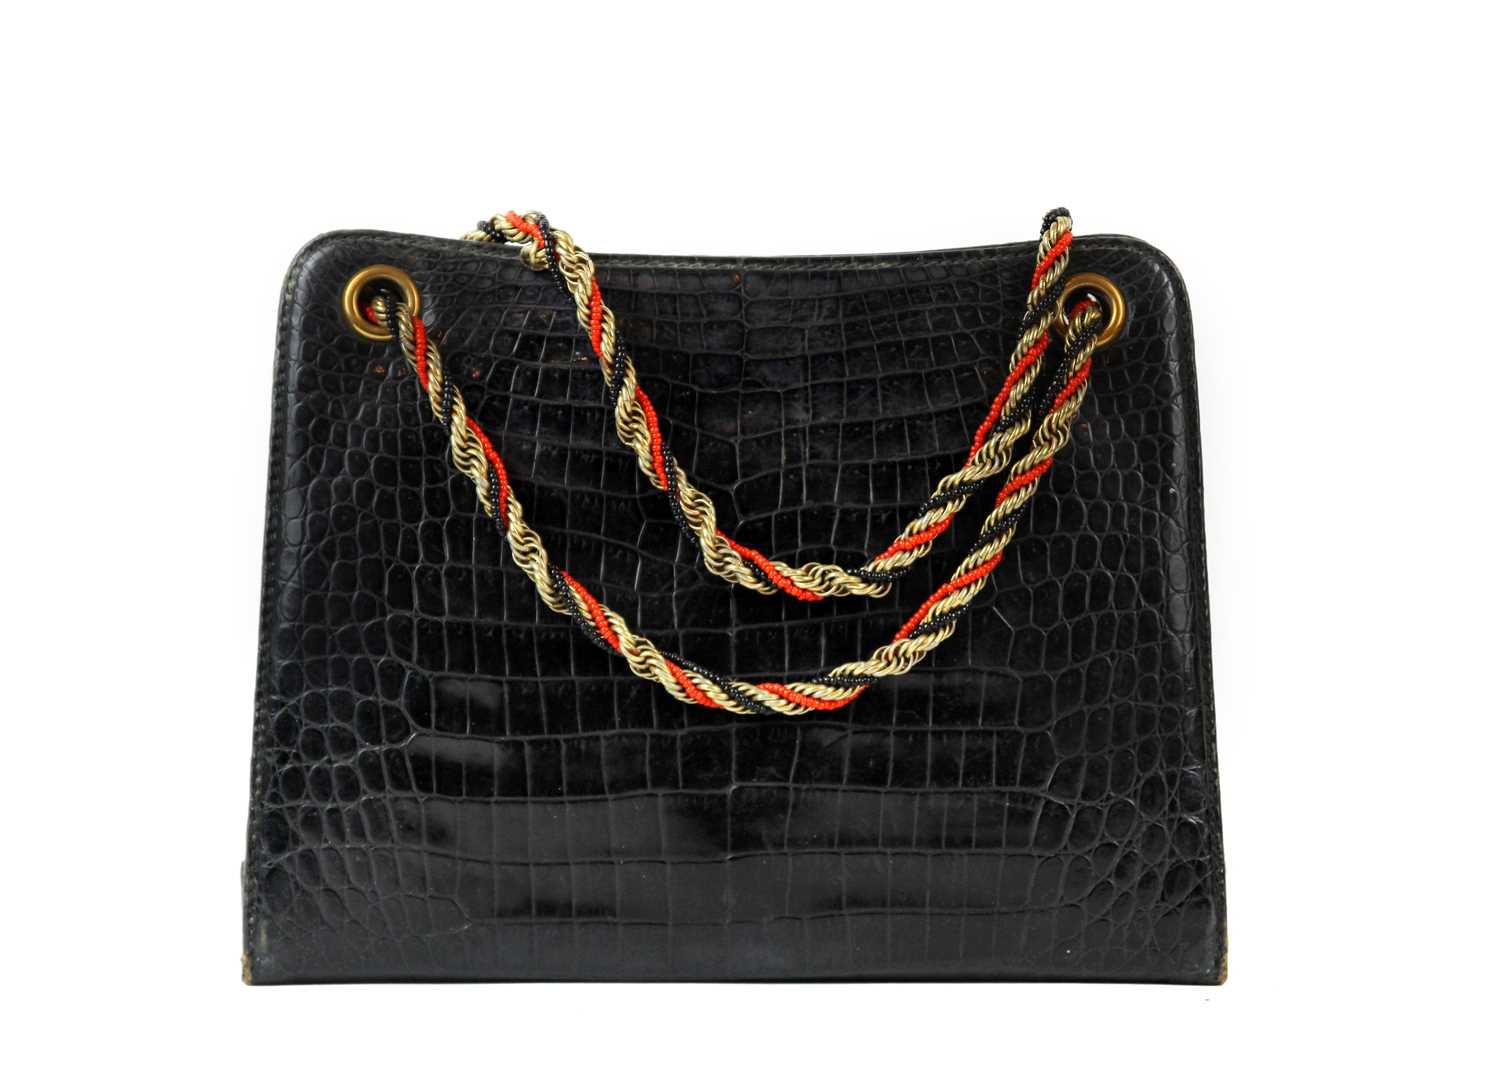 A Gucci Crocodile handbag